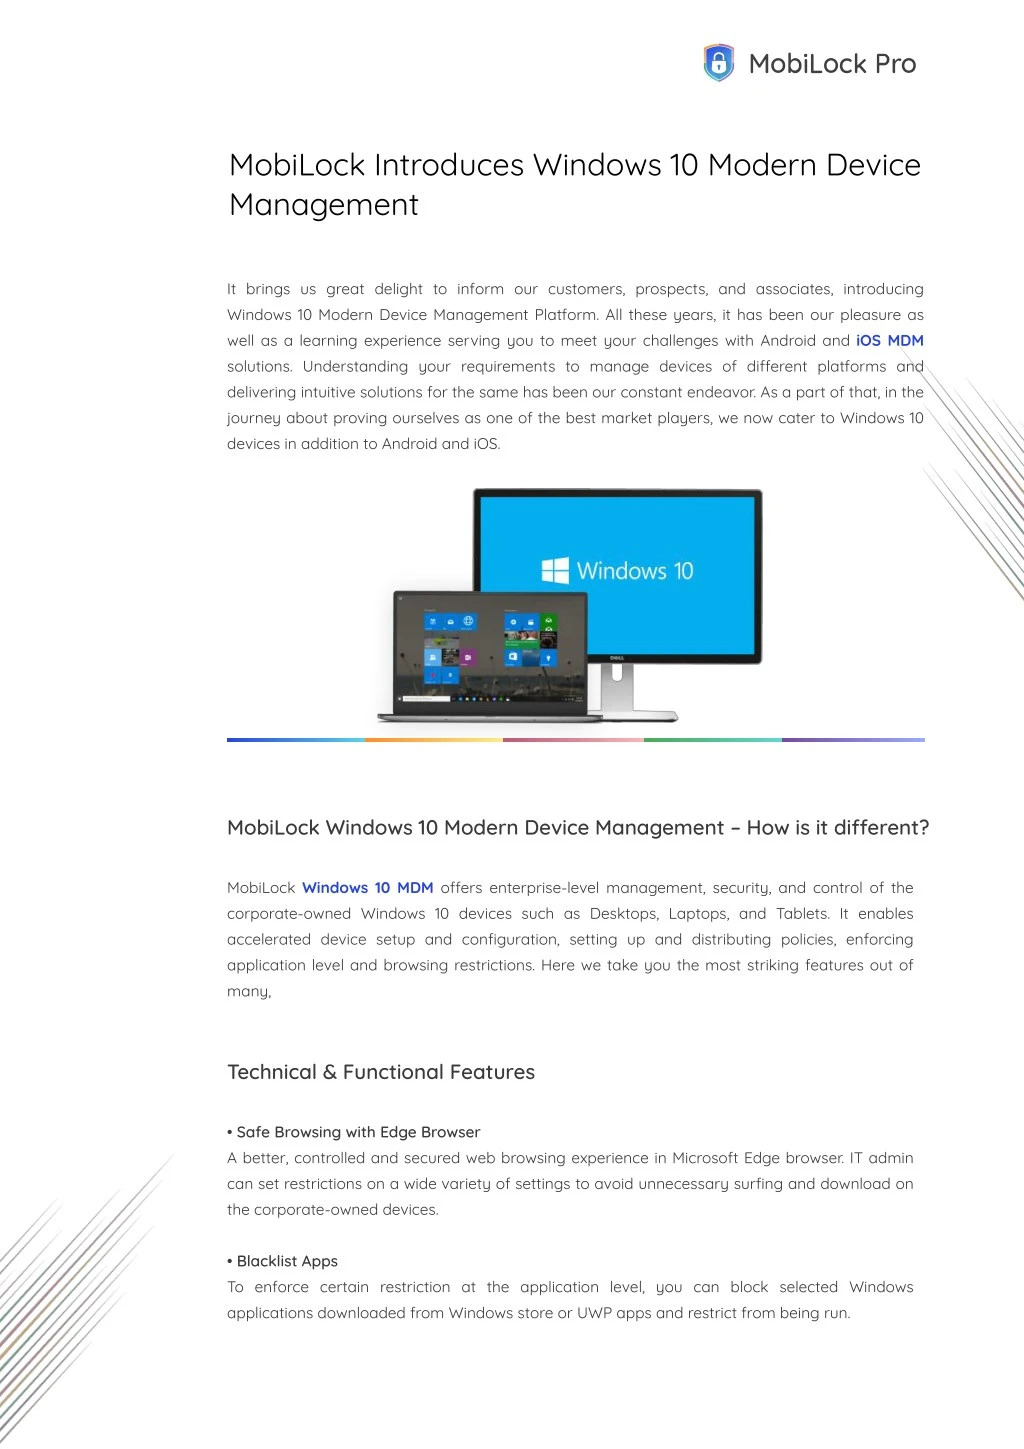 mobilock introduces windows 10 modern device